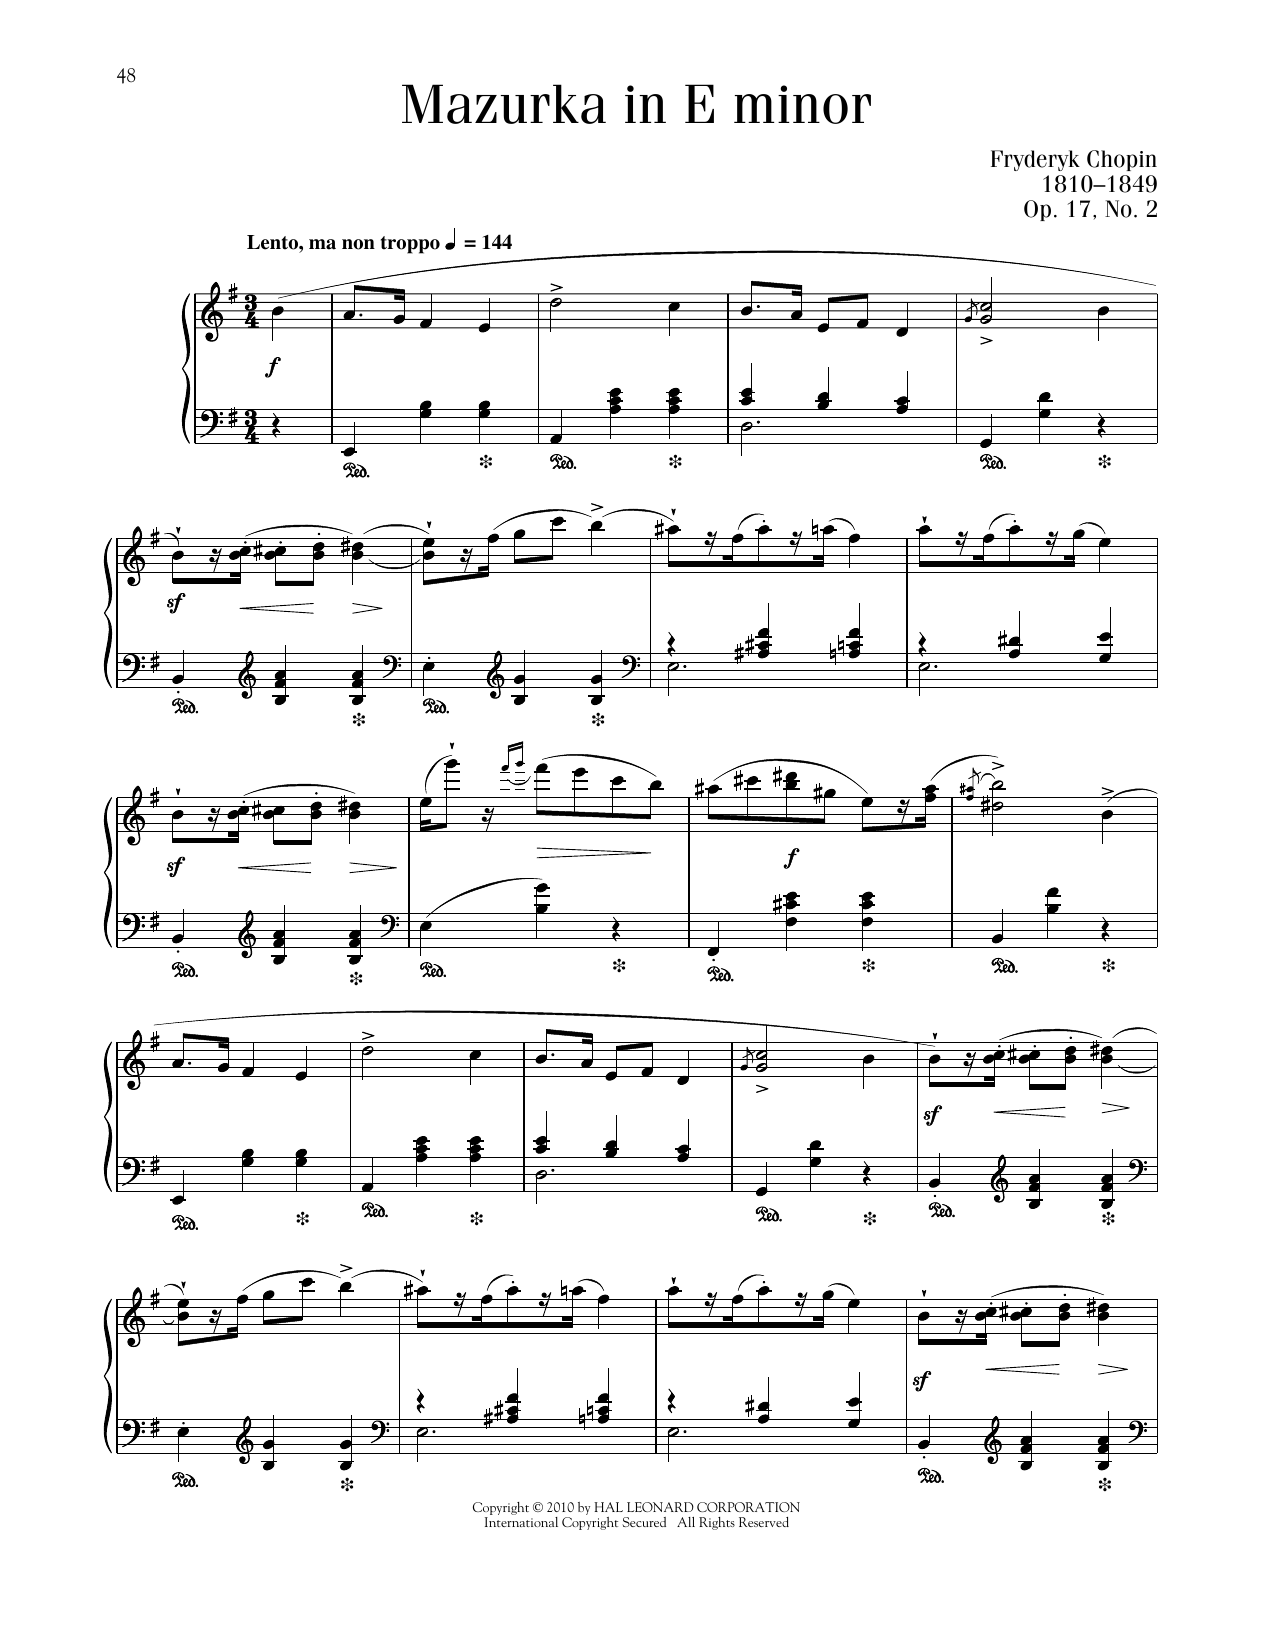 Frederic Chopin Mazurka, Op. 17, No. 2 sheet music notes printable PDF score